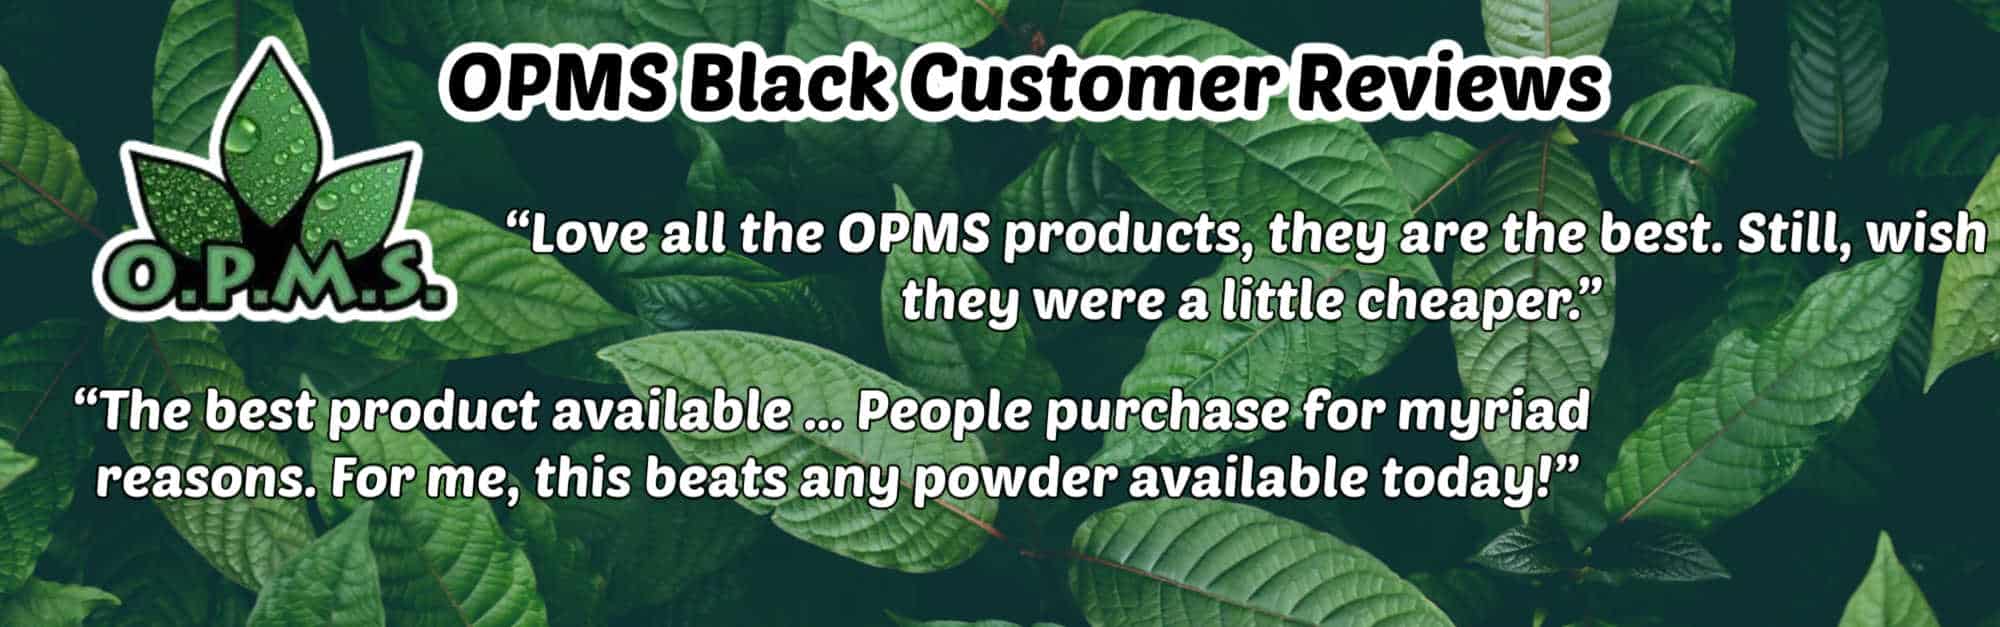 image of opms black customer reviews